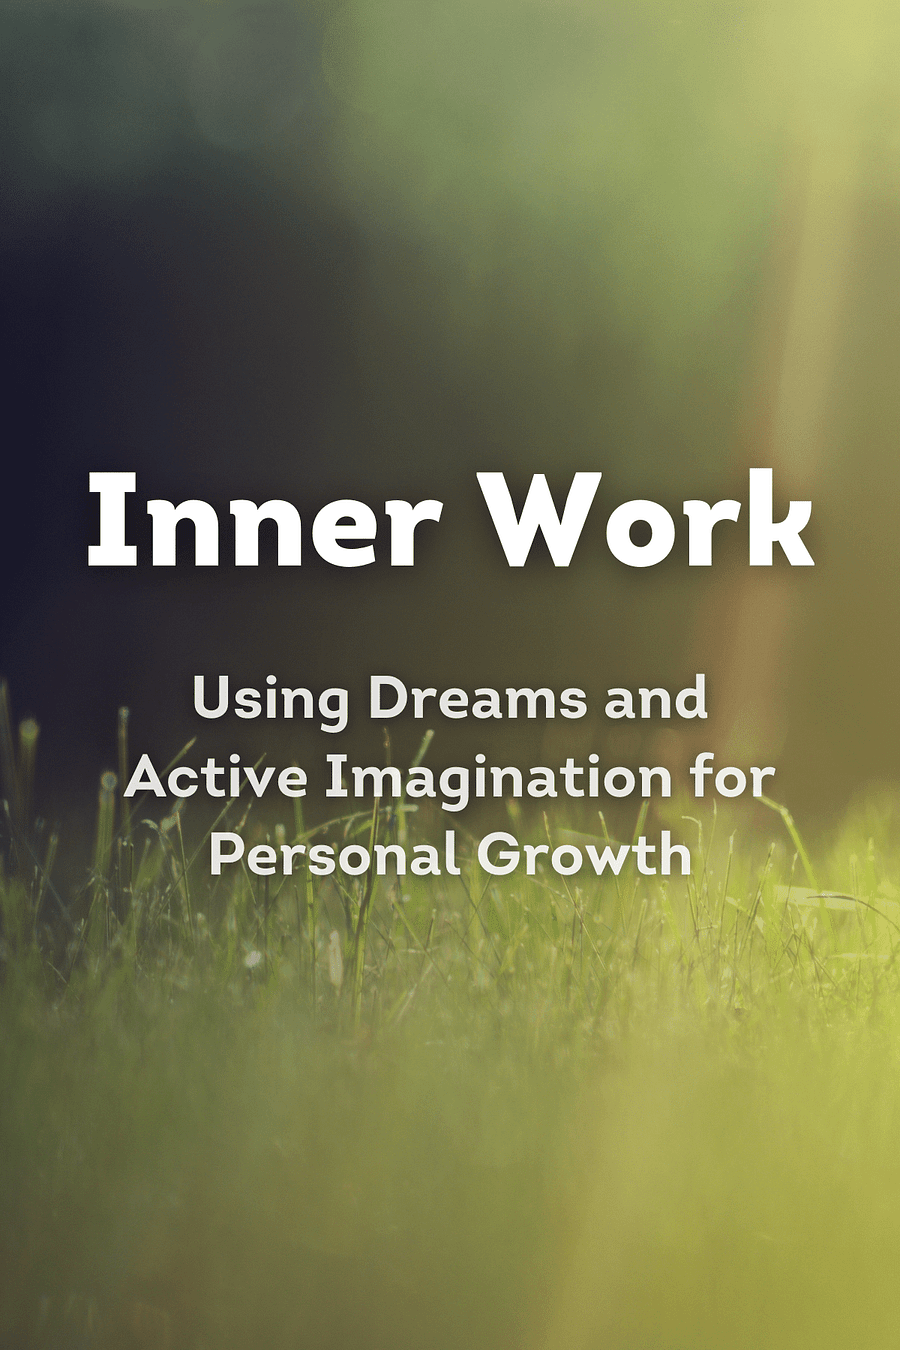 Inner Work by Robert A. Johnson - Book Summary